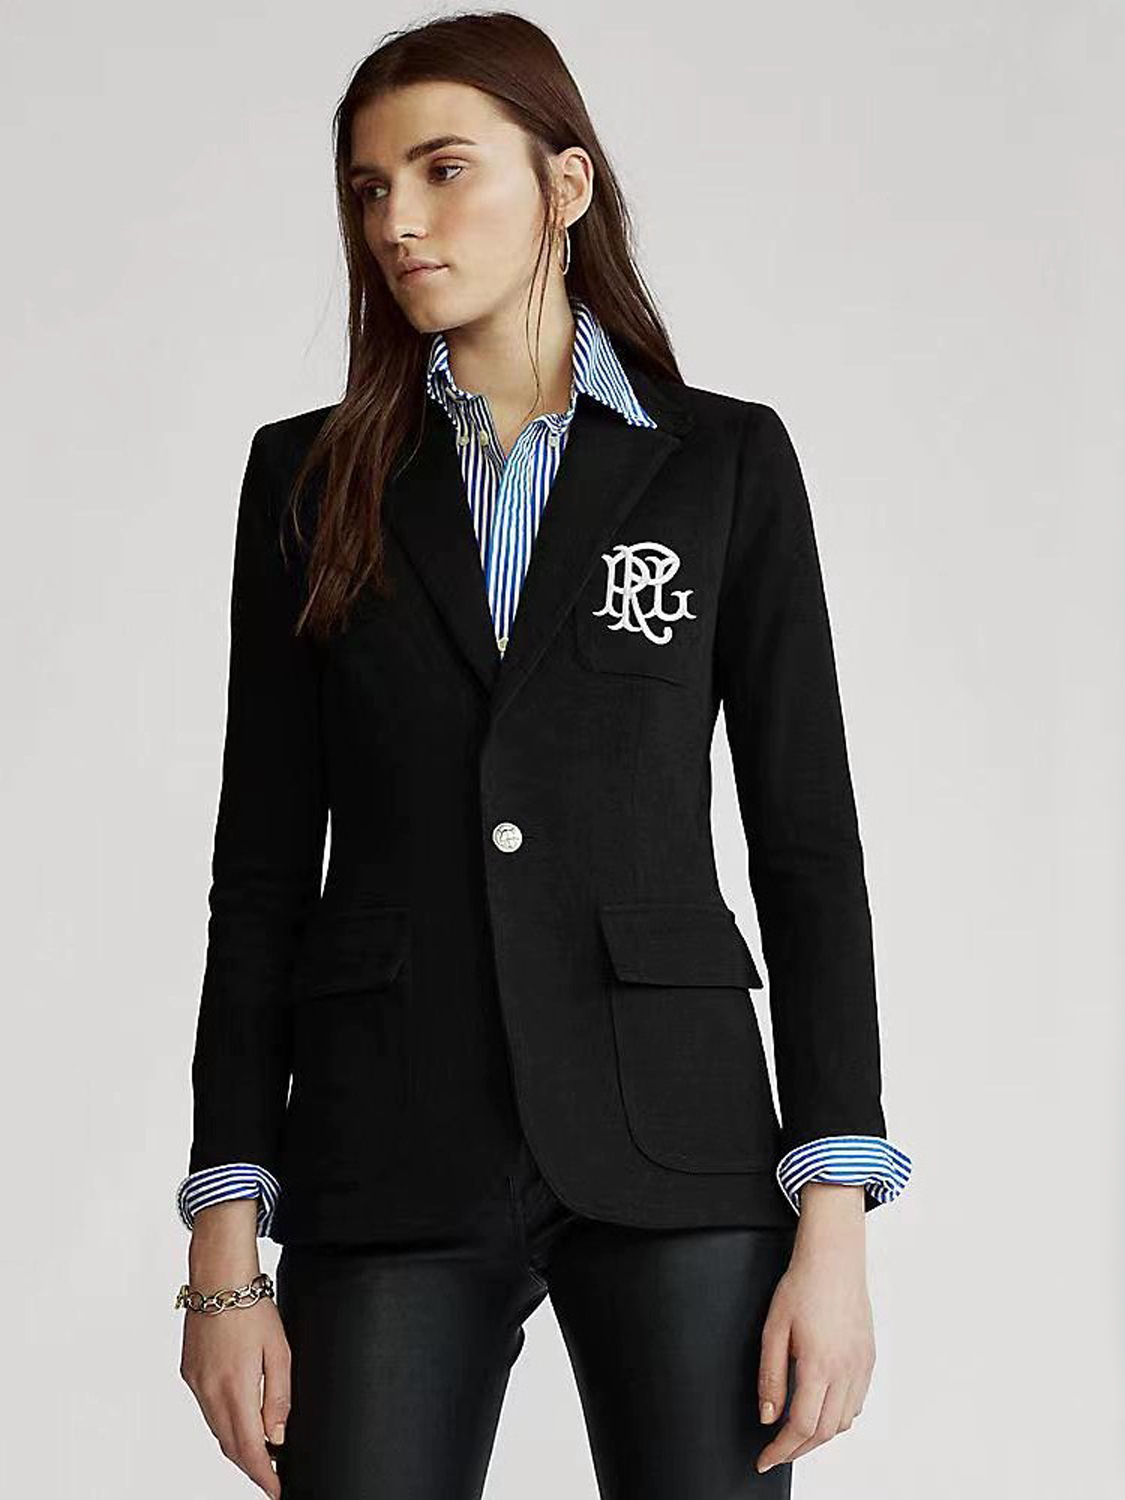 Women's Designer Suit Blazer Jacket Coats Clothing Spring Autumn Letters Top